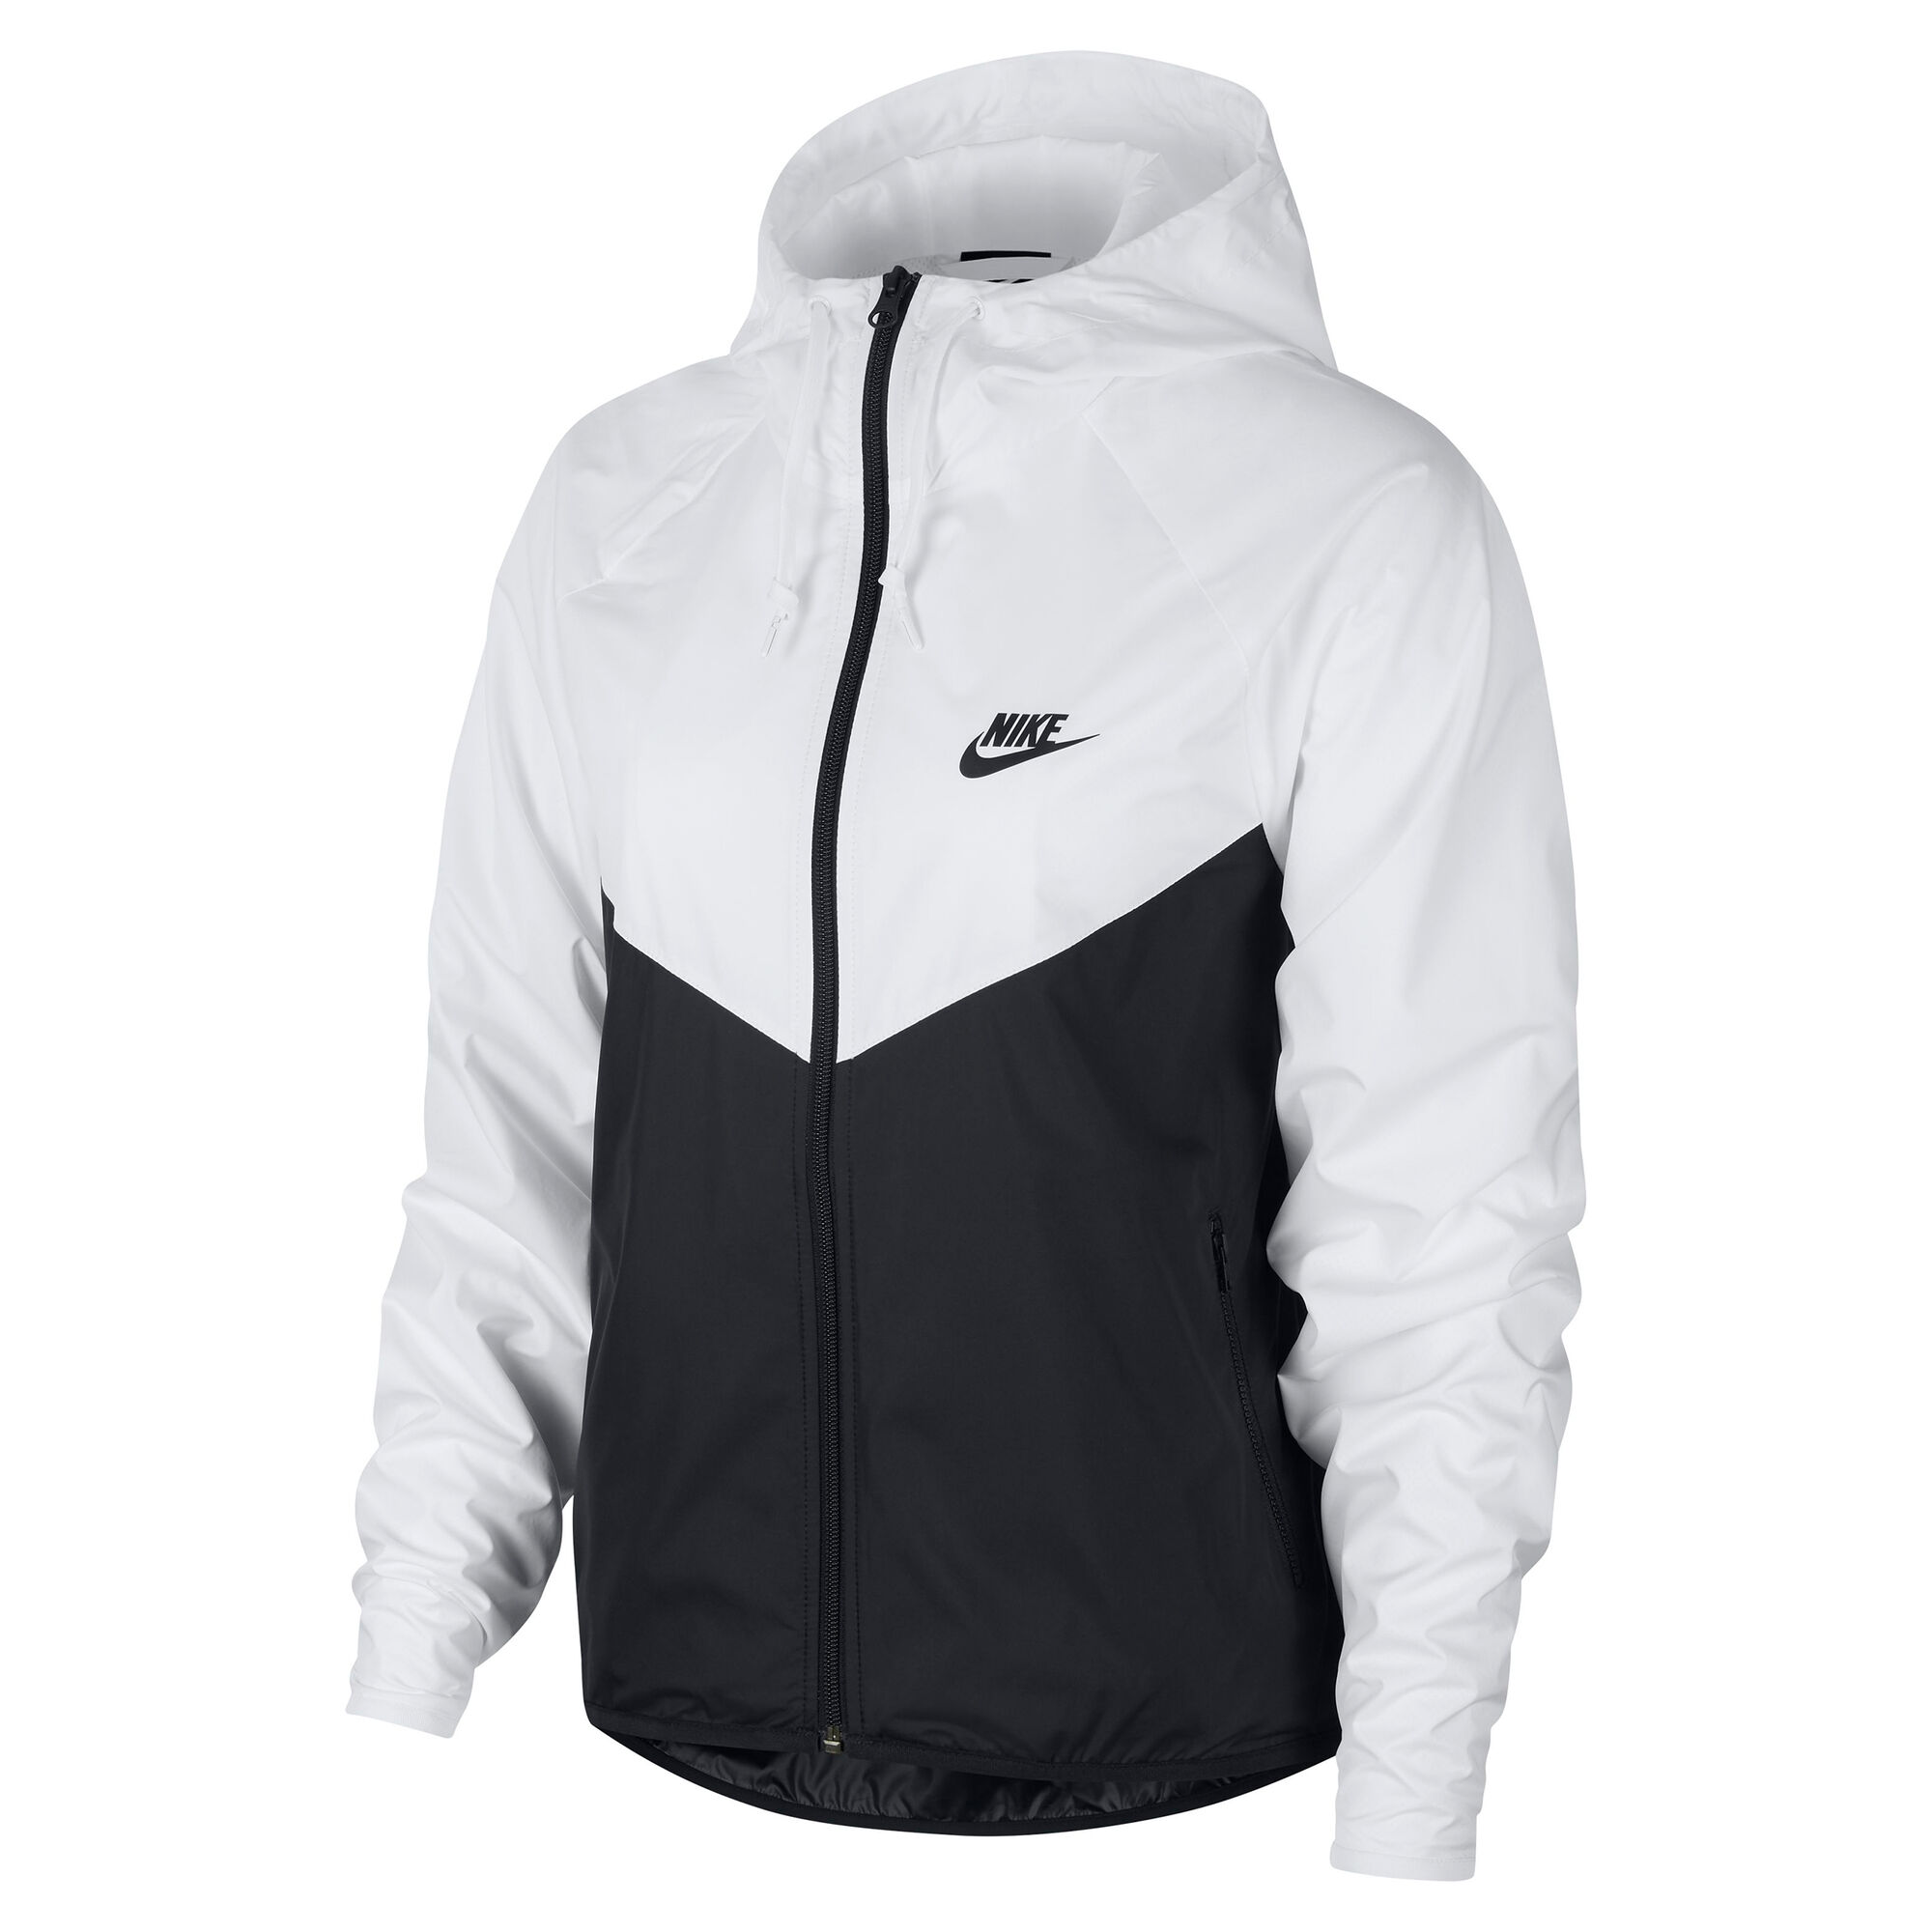 Buy Nike Sportswear Windrunner Training Jacket Women White, Black online